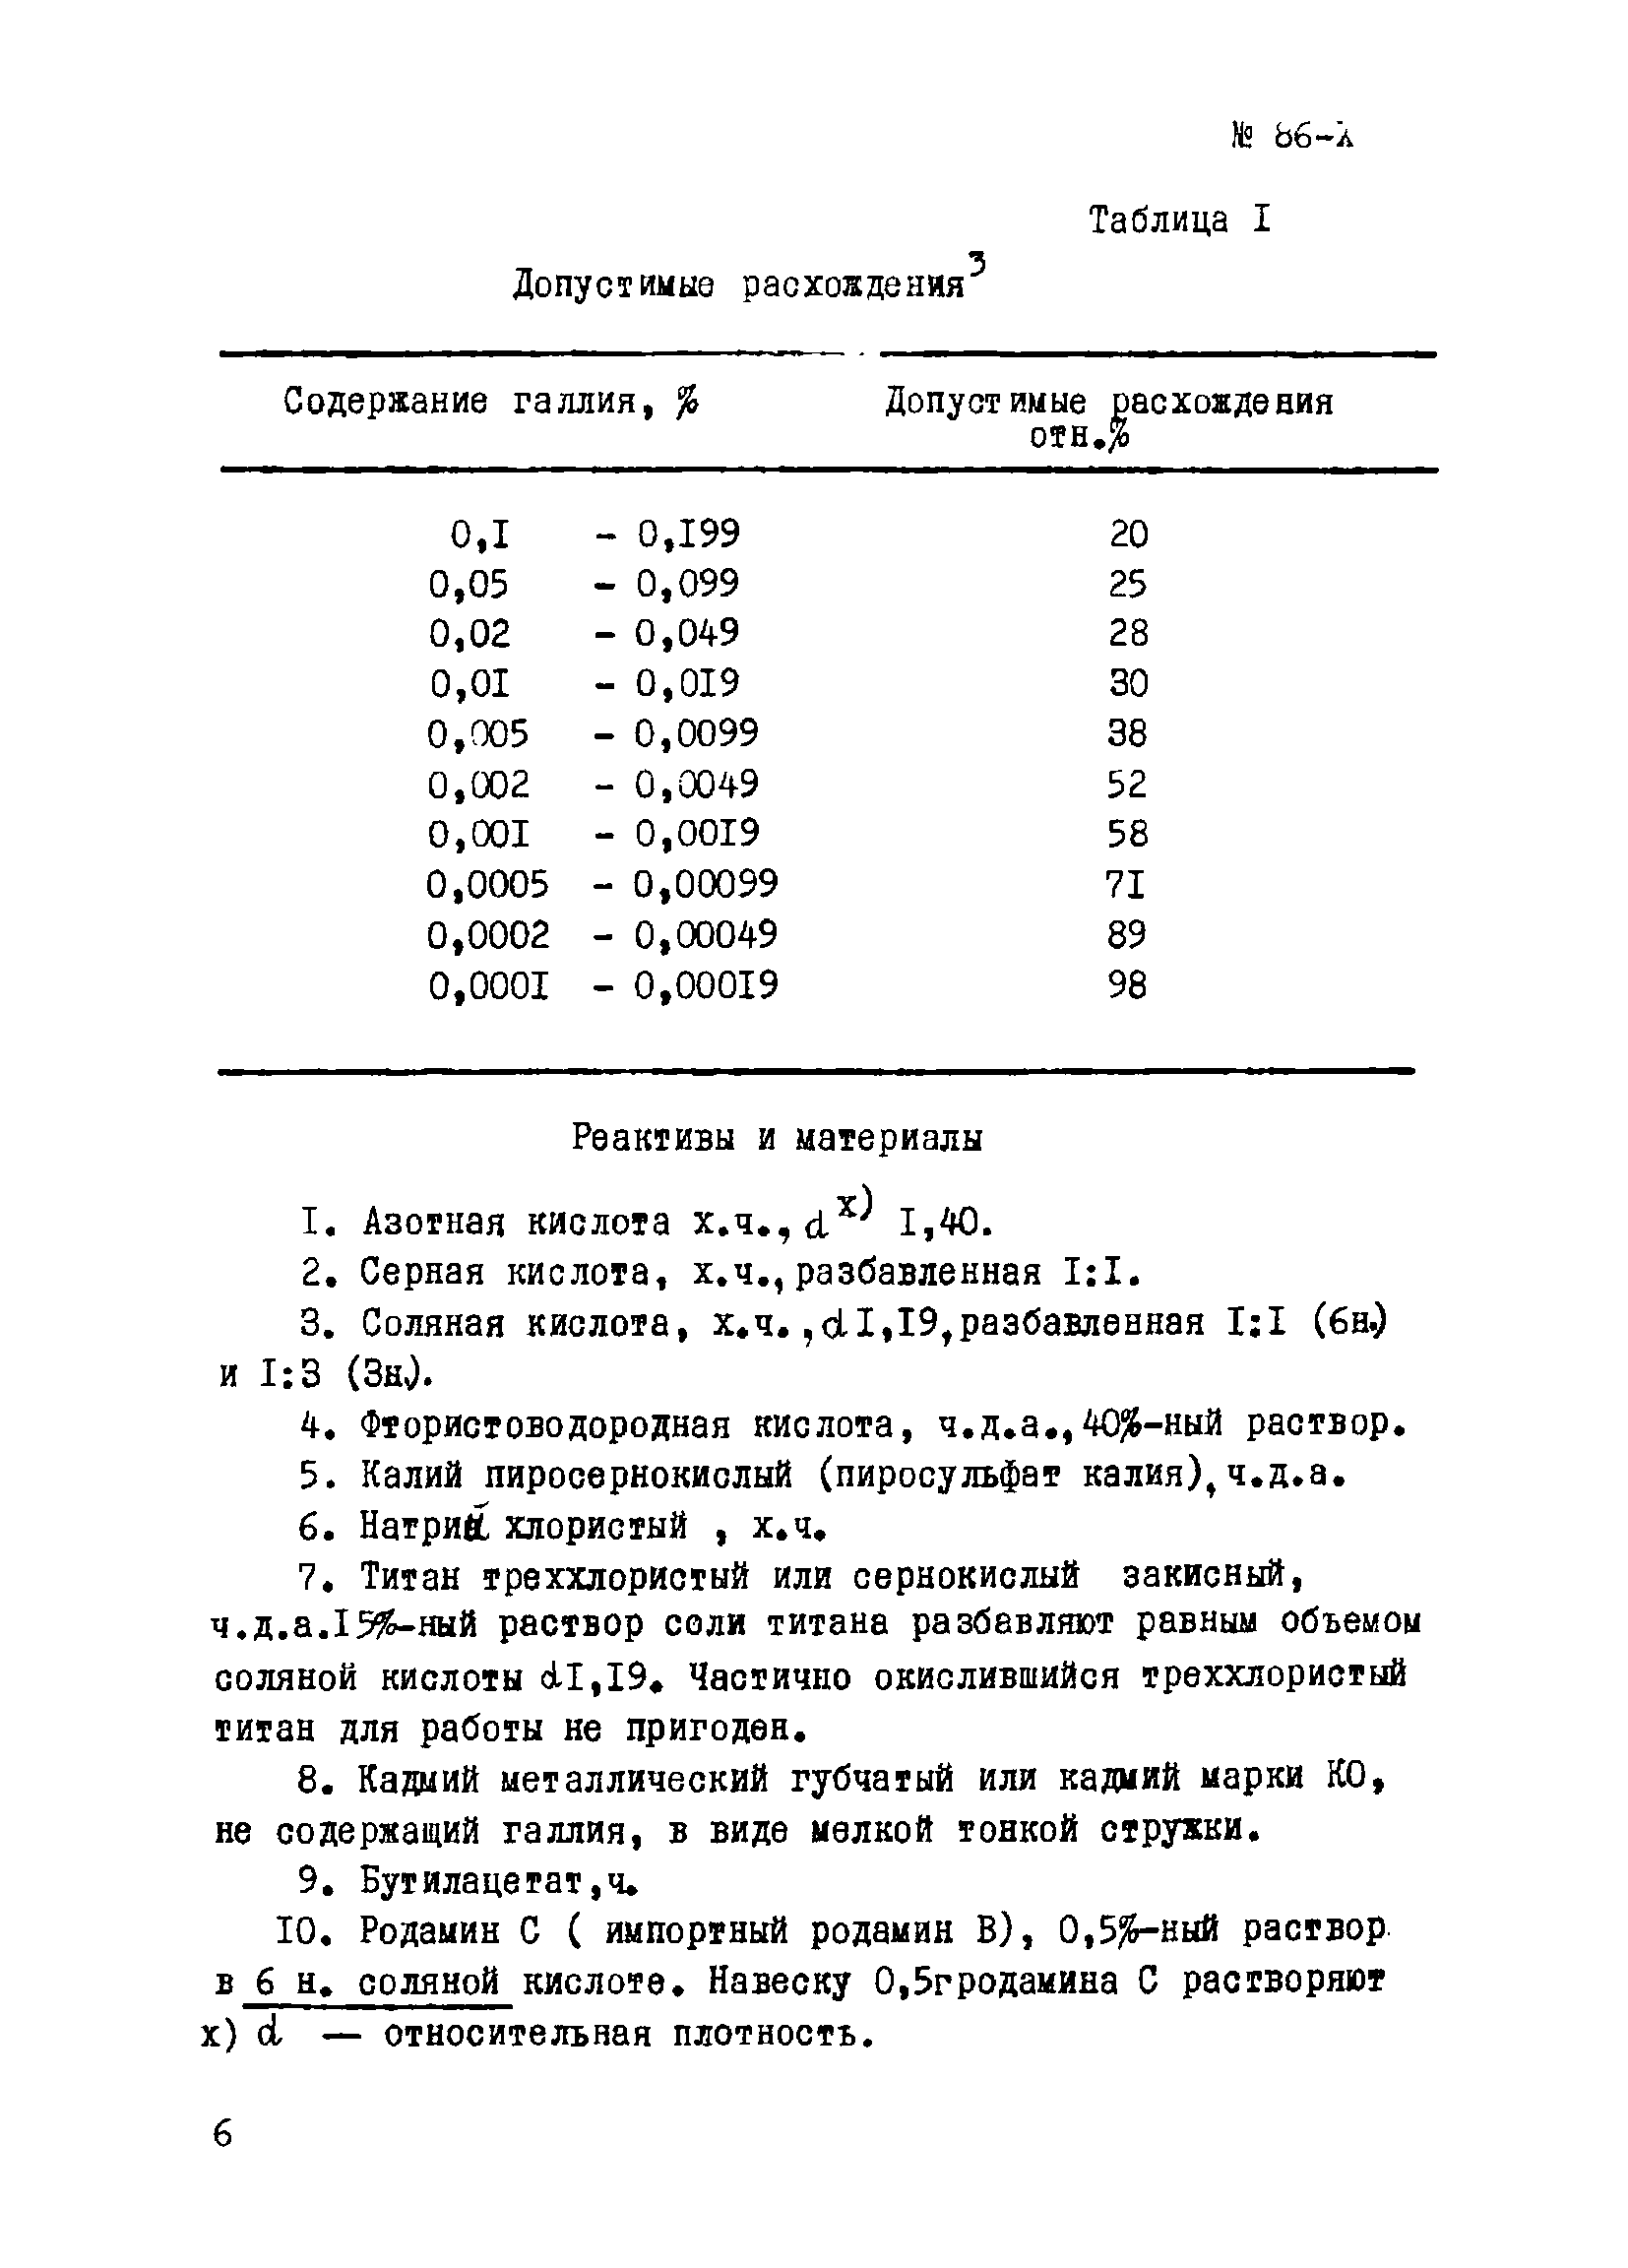 Инструкция НСАМ 86-Х